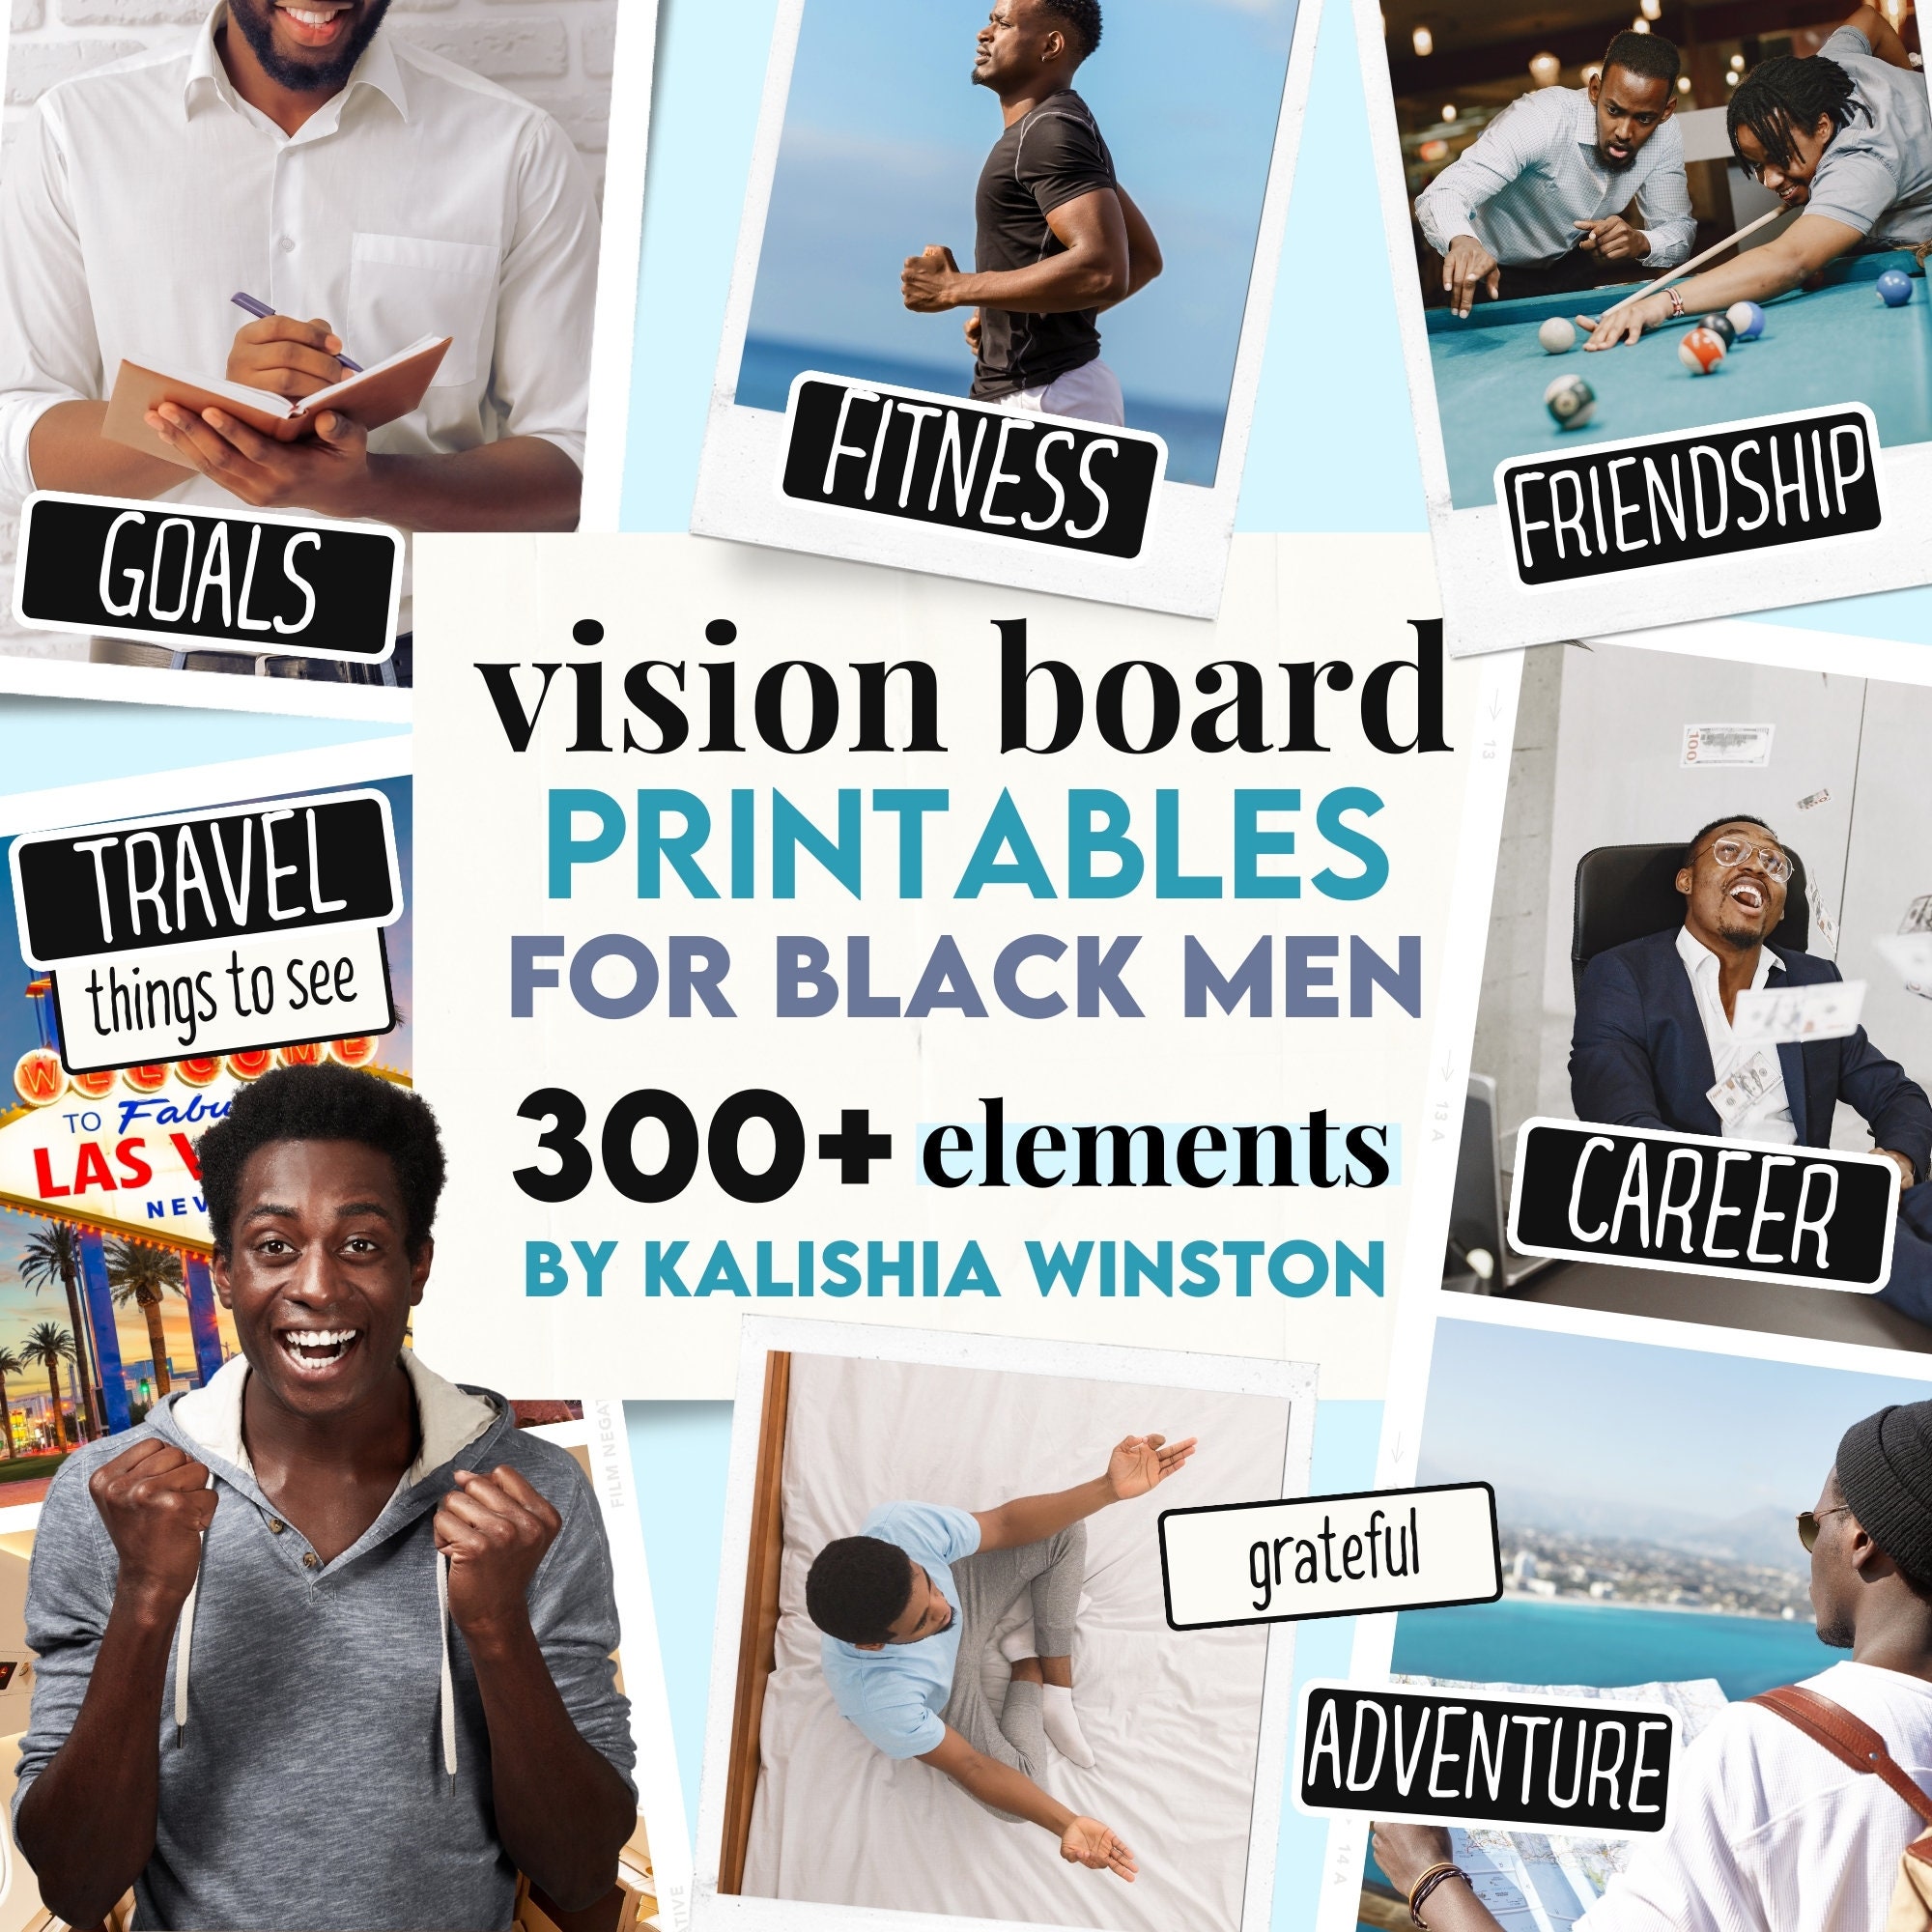 Vision Board Printable Black Women, Vision Board Pictures Kit, Black Woman  Vision Board Images, Vision Board Clipart, Christian Vision Board 